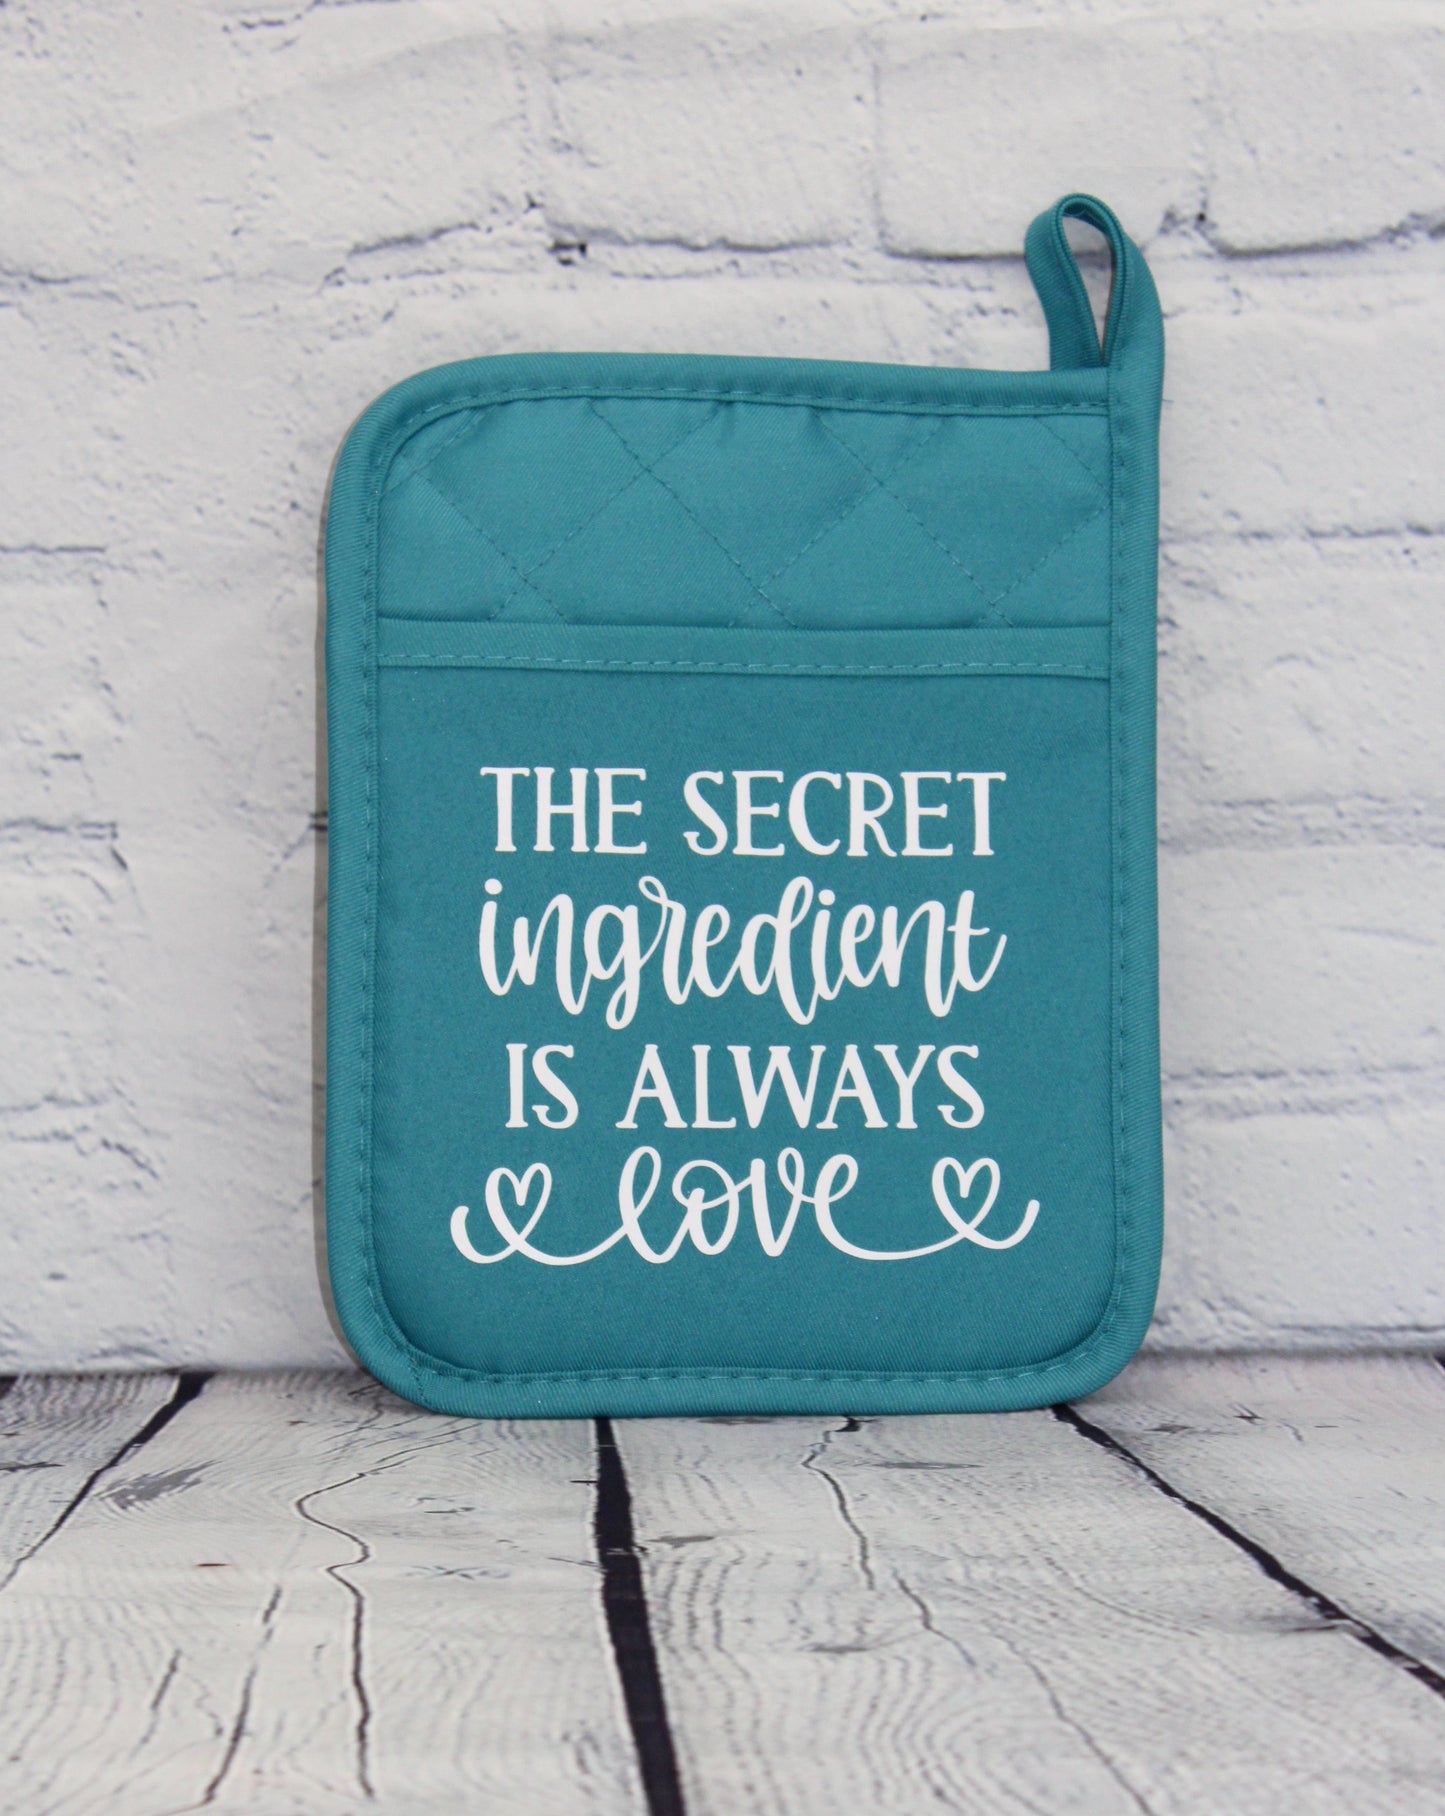 The Secrete Ingredient Is Always Love